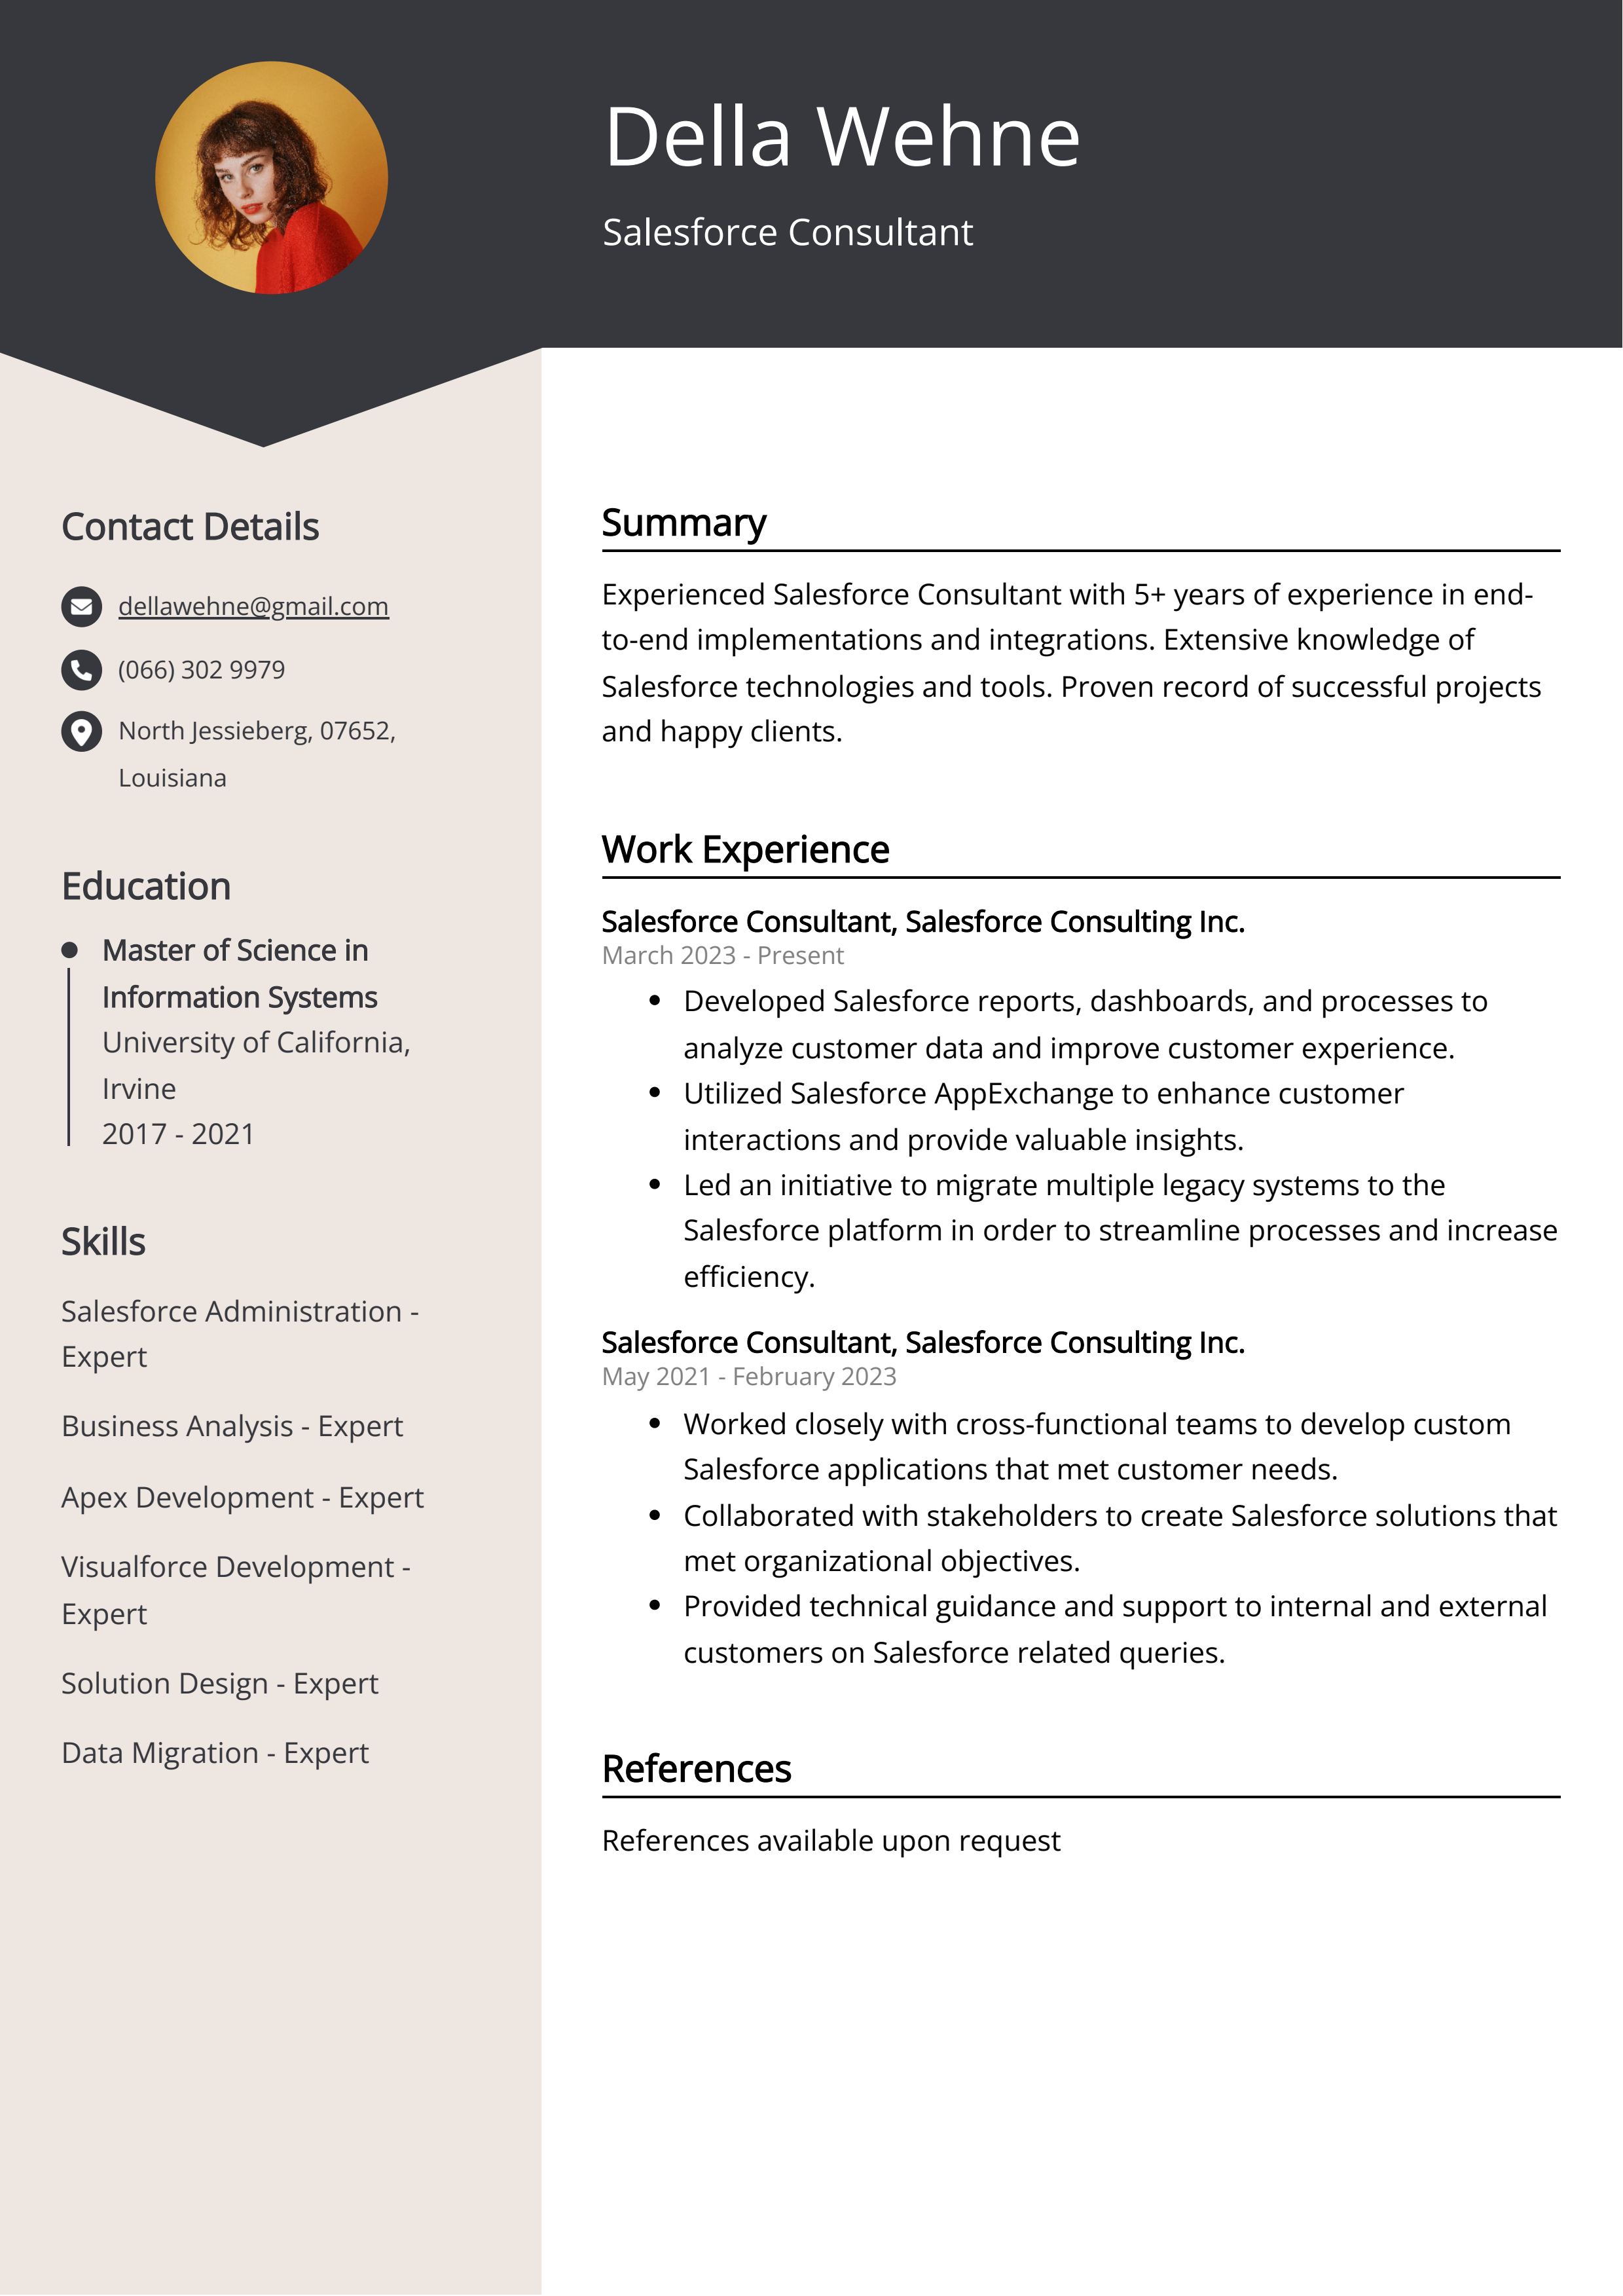 Salesforce Consultant CV Example